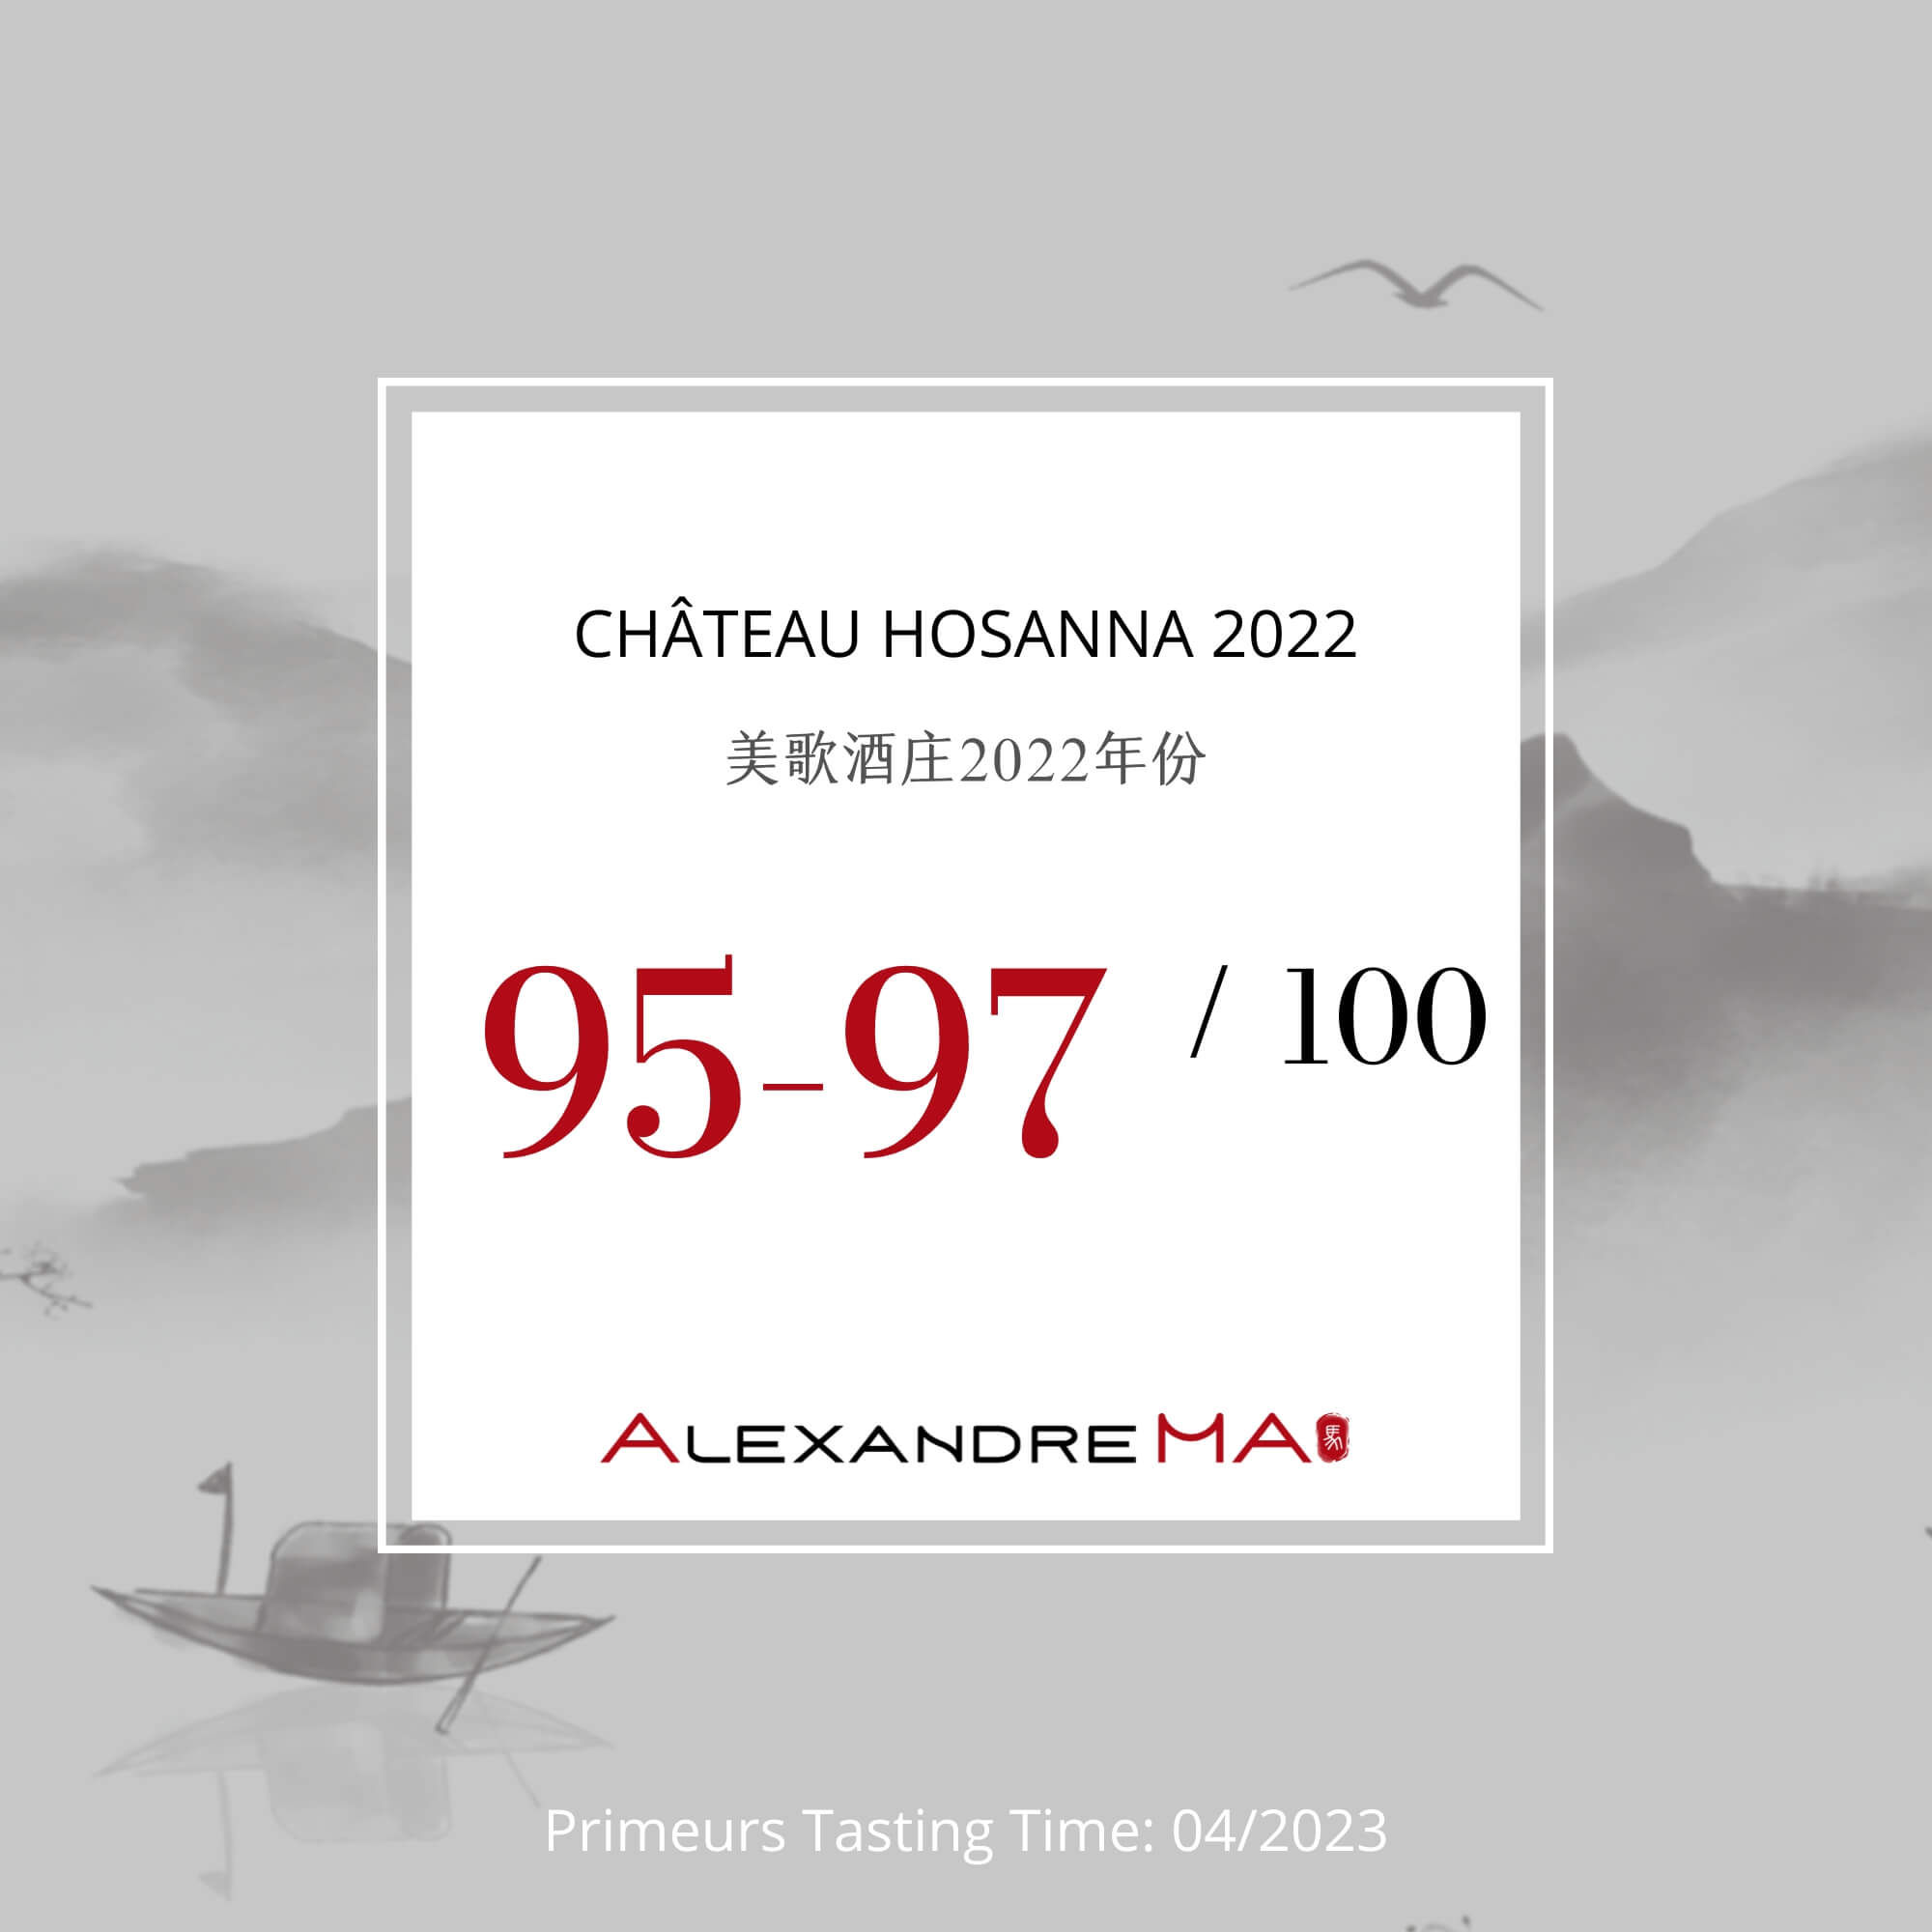 Château Hosanna 2022 Primeurs 美歌酒庄 - Alexandre Ma